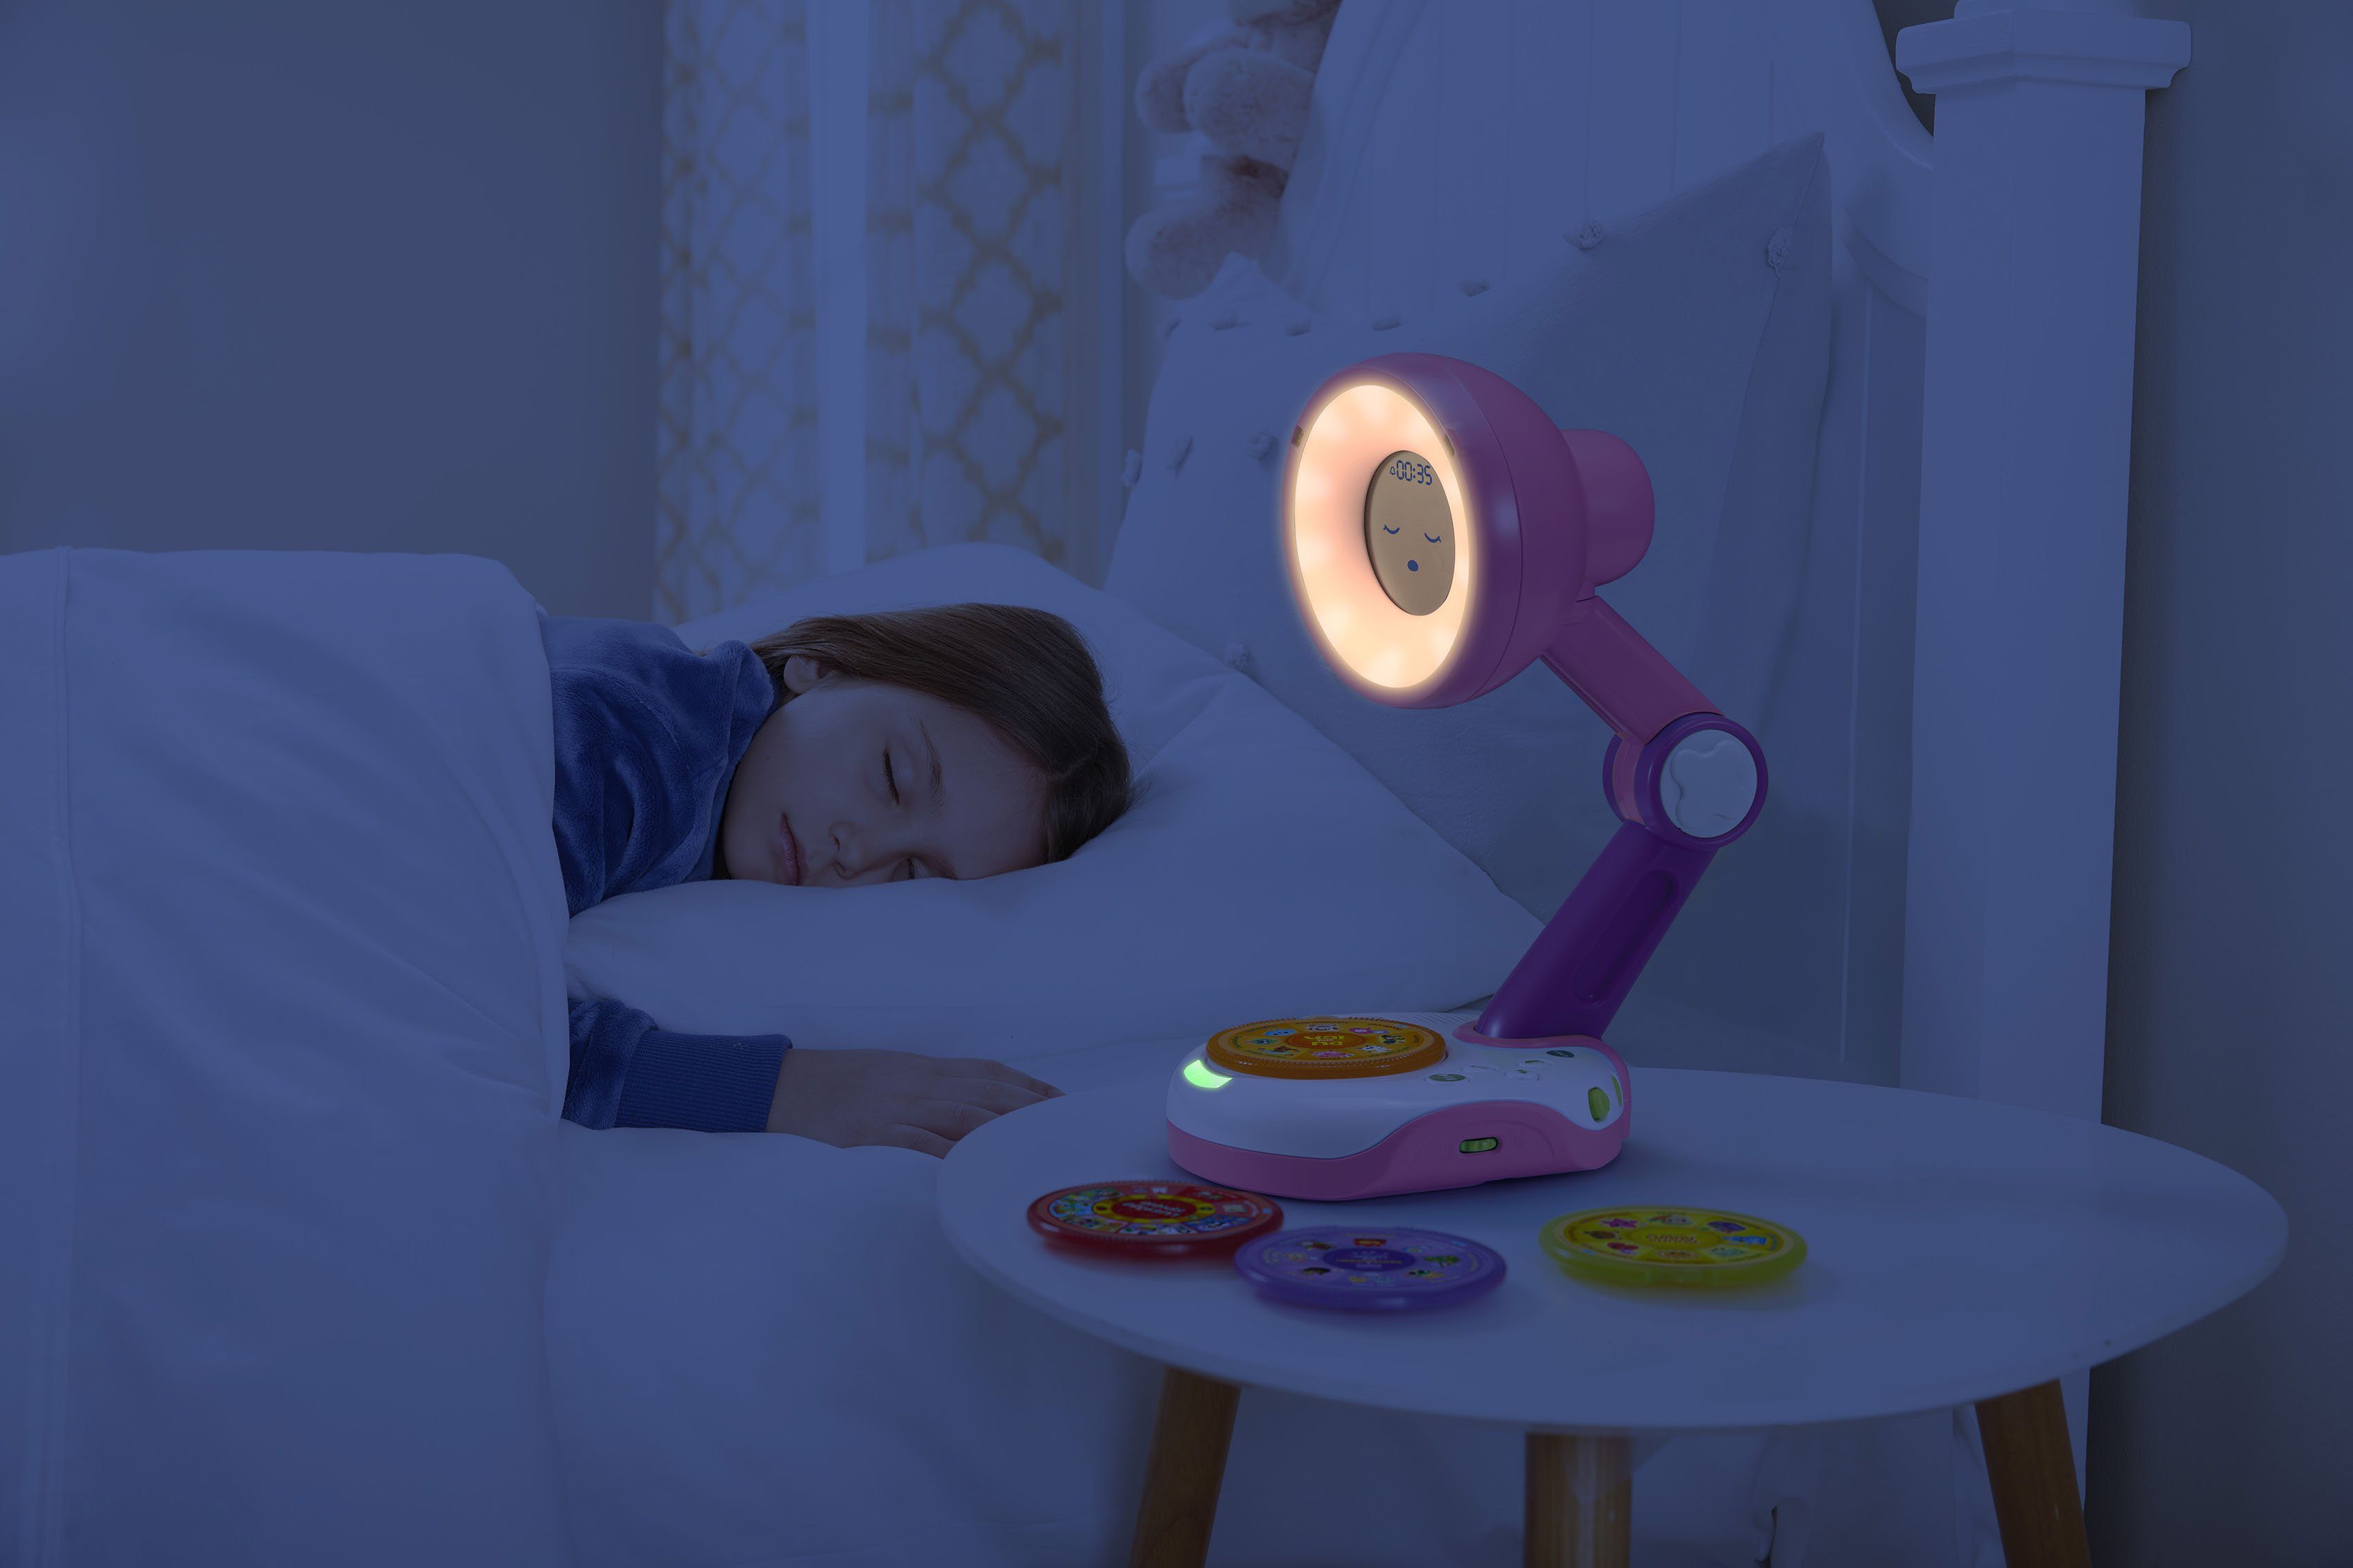 Vtech® Funny Sunny, Lernspielzeug pink interaktive die Lampen-Freundin,